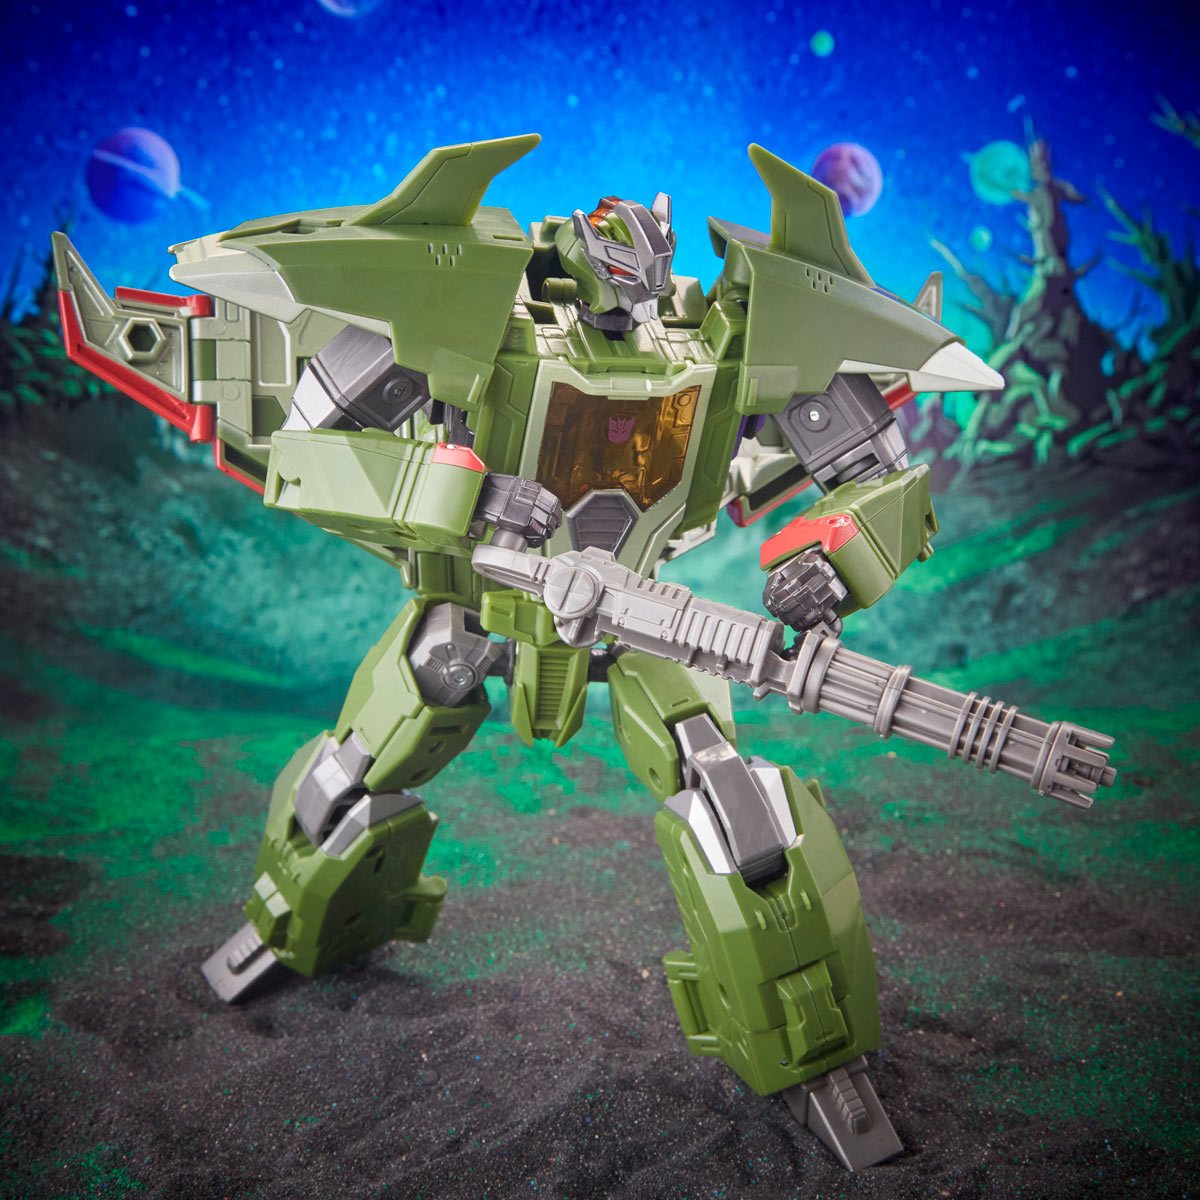 Transformers Generations Legacy Leader Evolution Prime Skyquake Hasbro